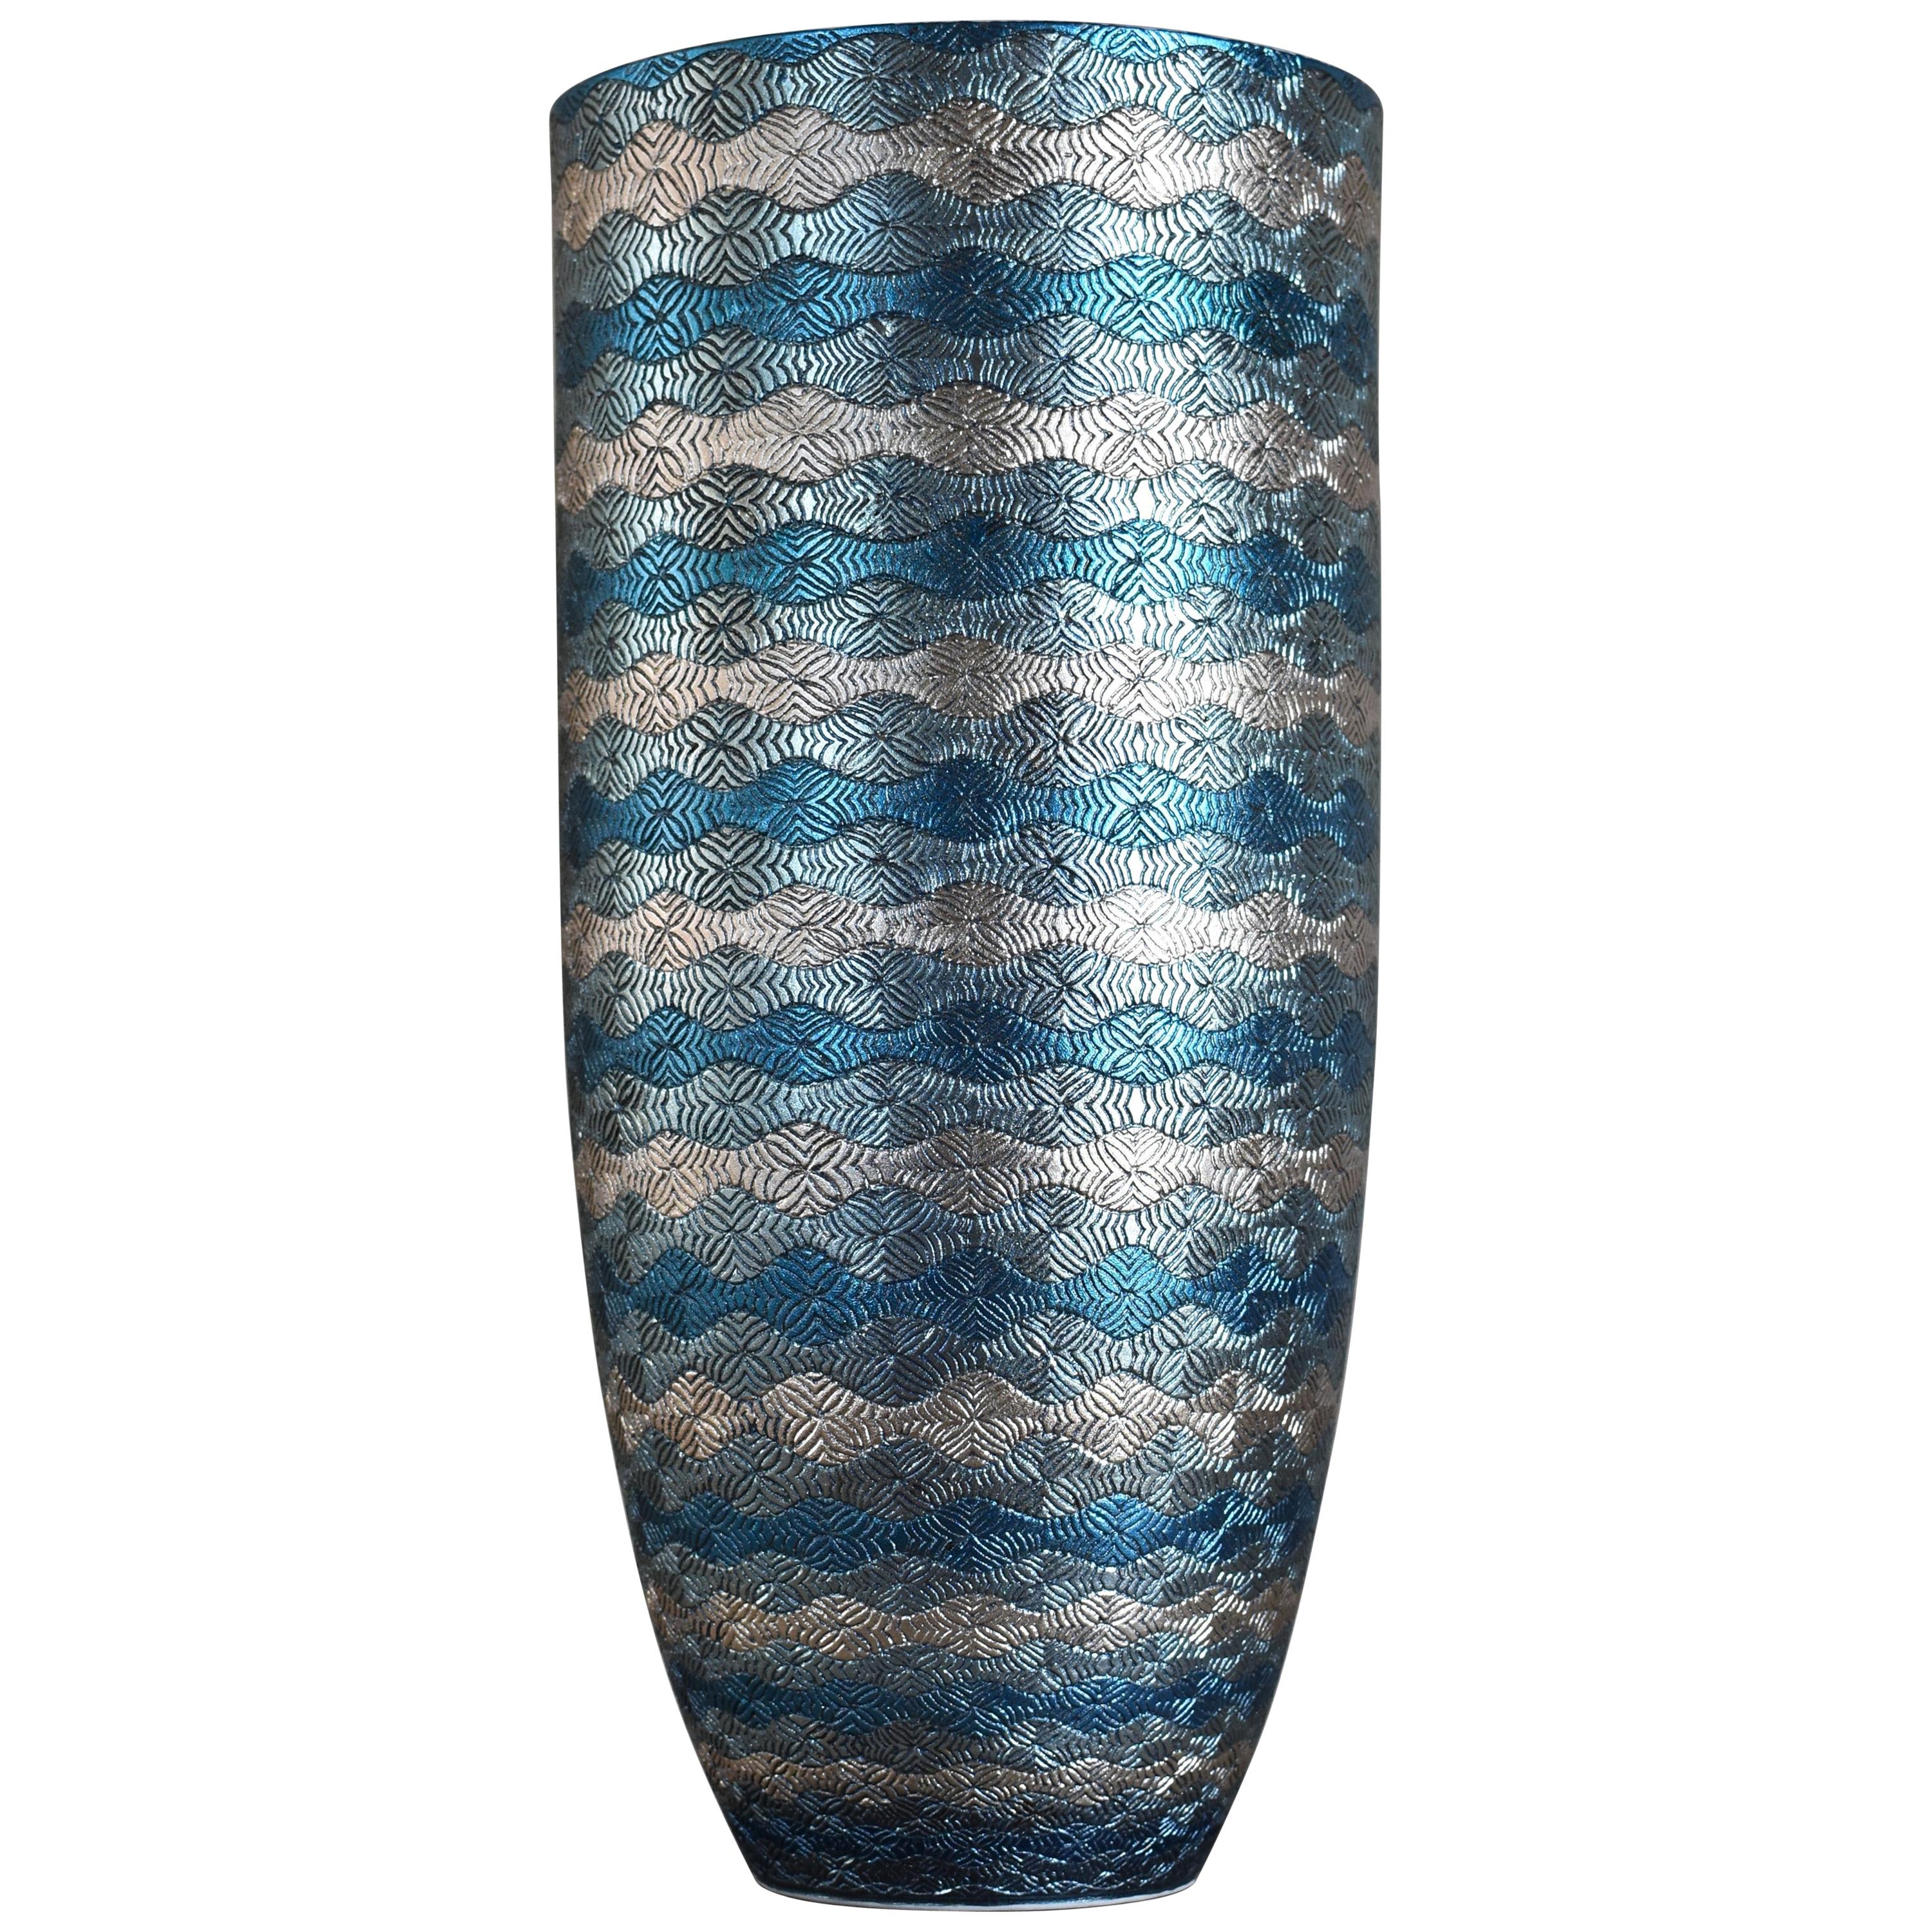 Japanese Contemporary Blue Platinum Porcelain Vase by Master Artist, 2